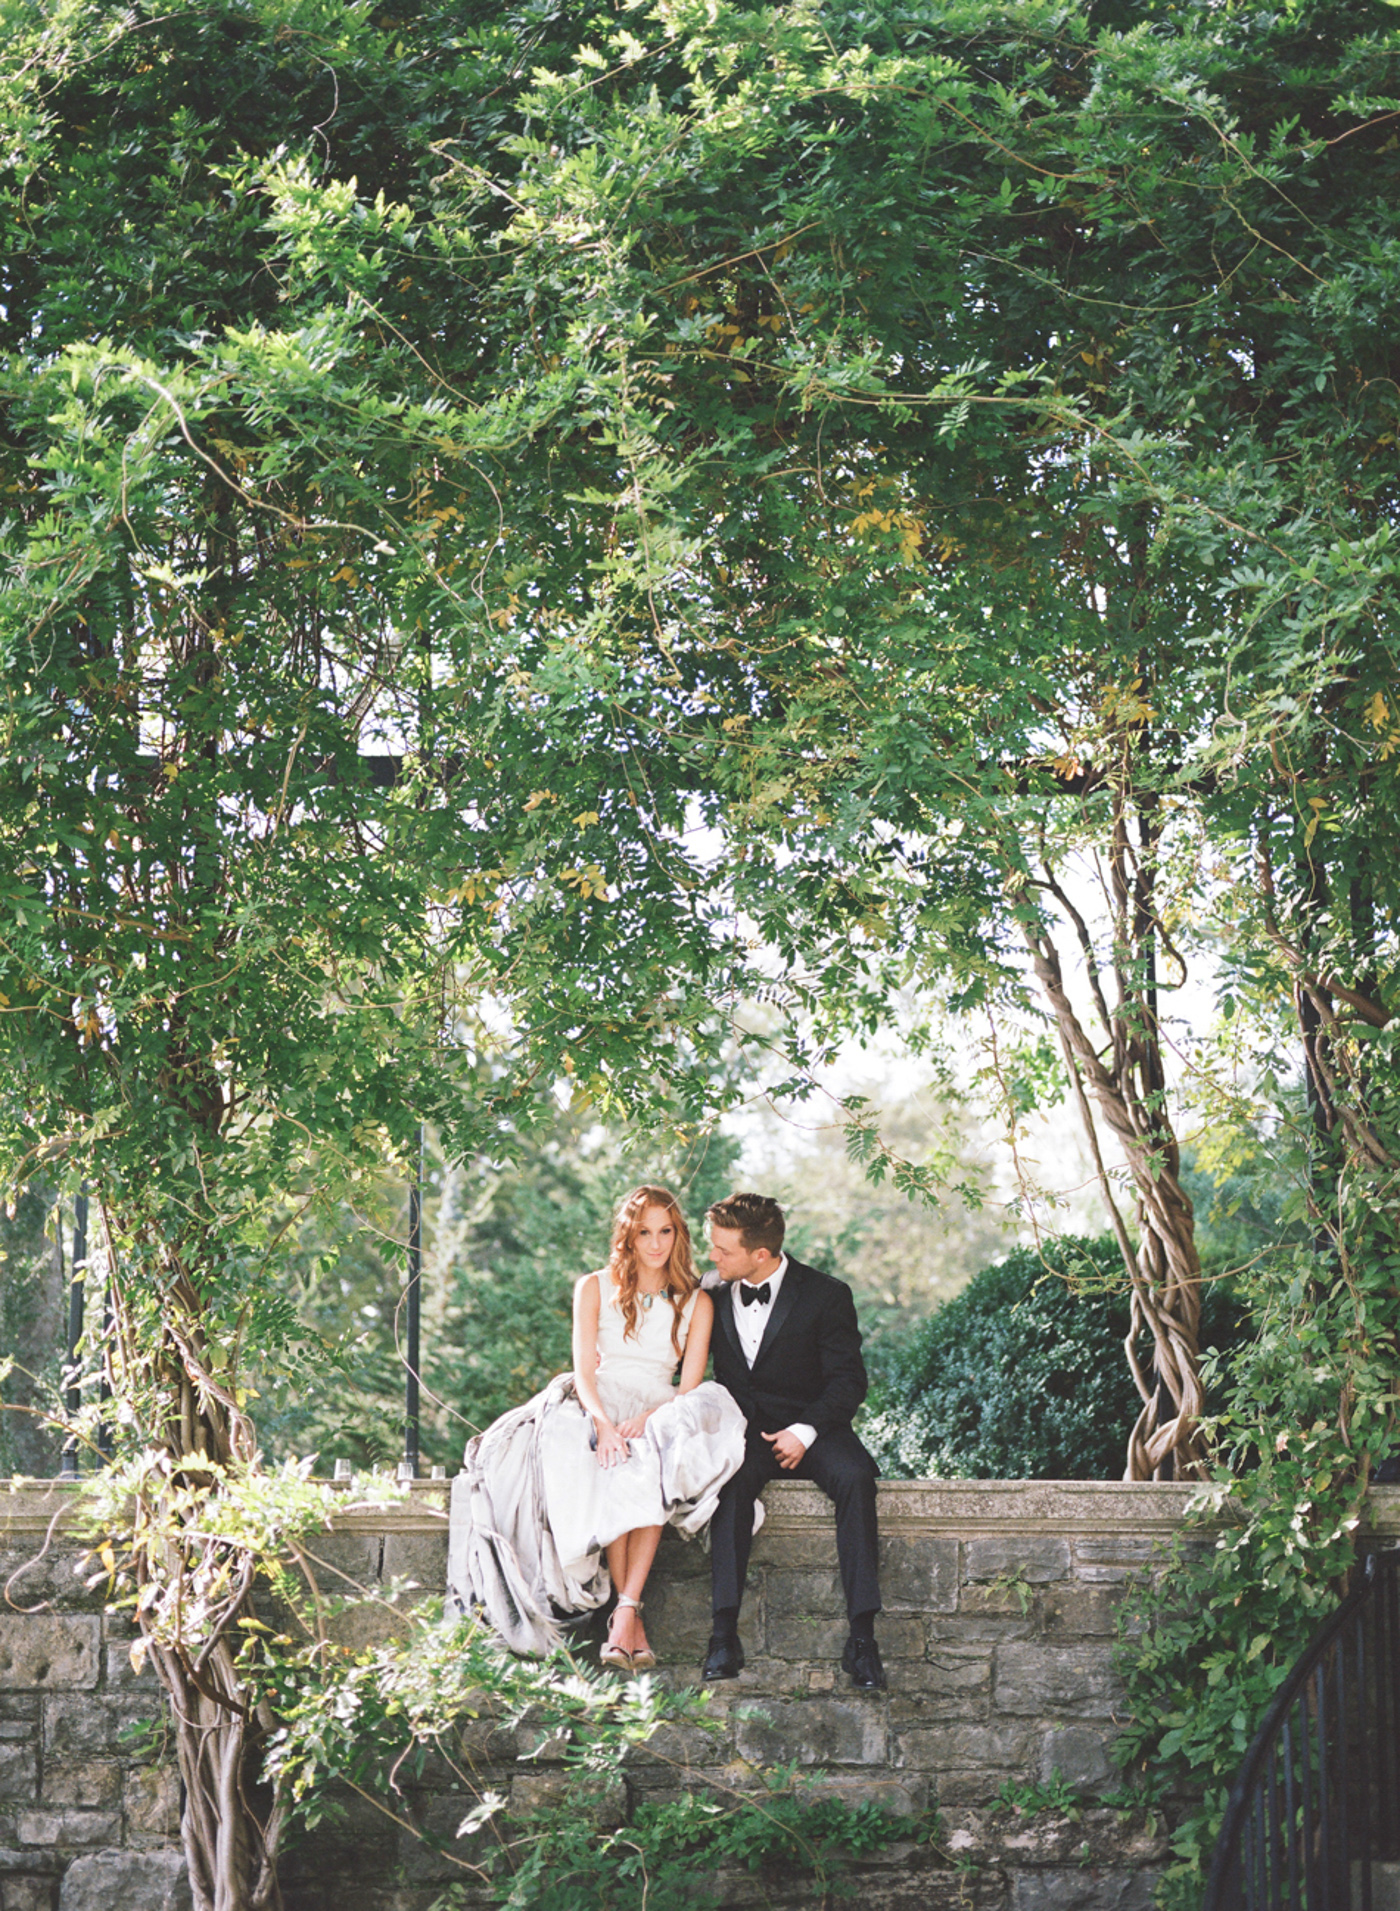 Nashville wedding photography, 
Koby Brown Photography, Tennessee Wedding Photographer,
Rachel and Johnny